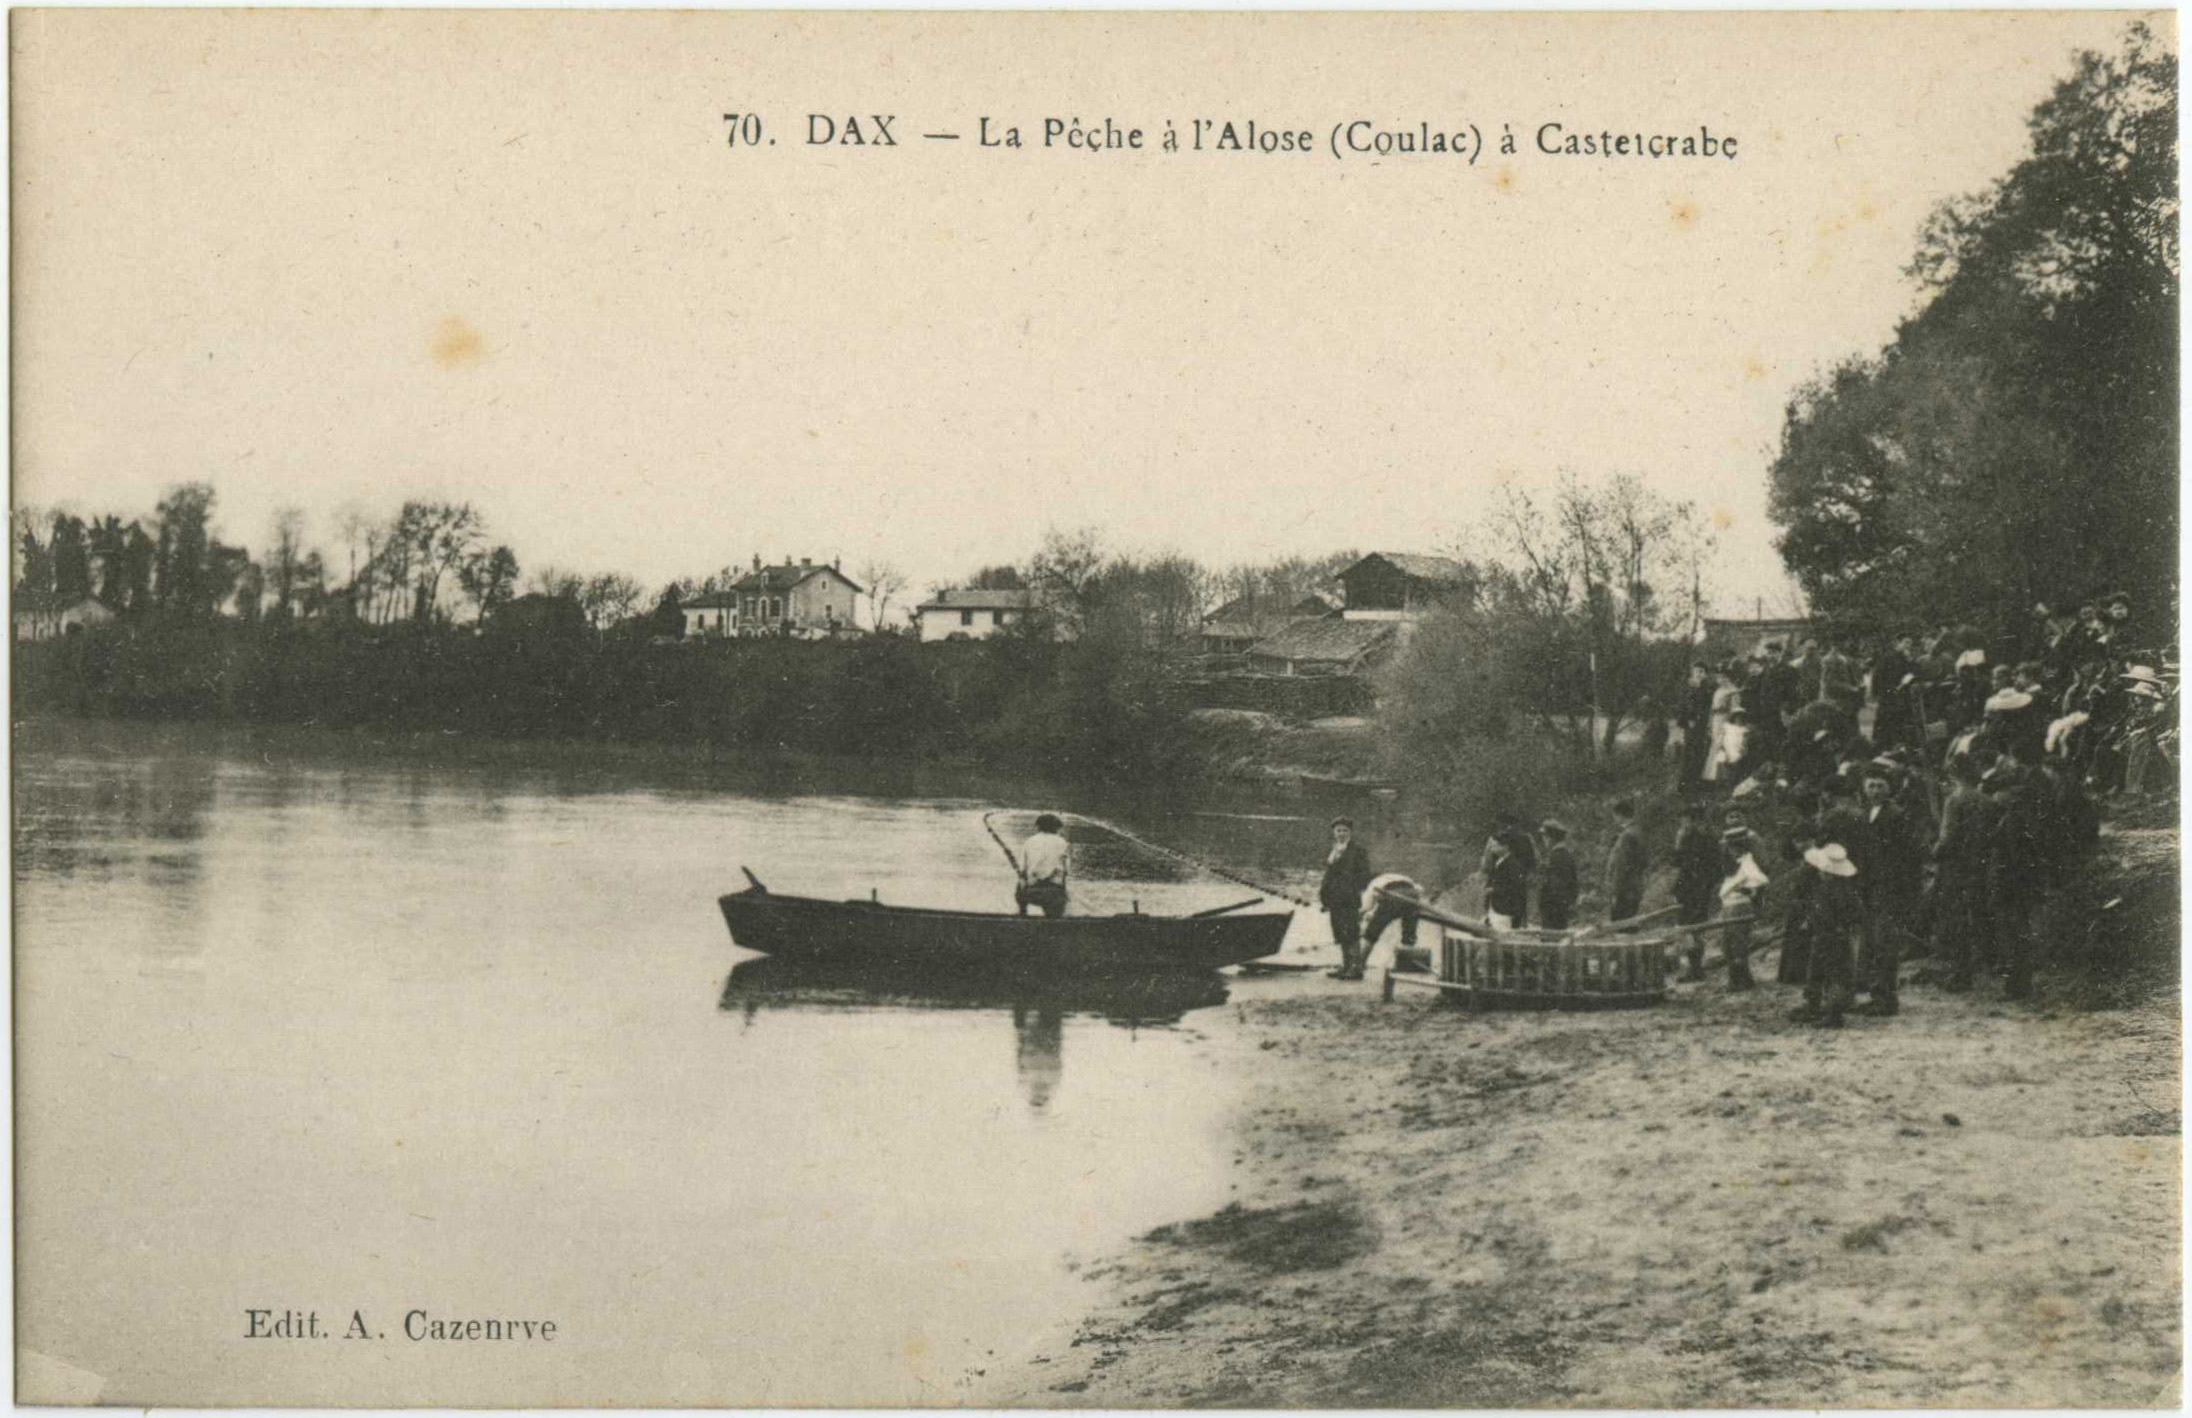 Dax - La Pêche à l'Alose (Coulac) à Castetcrabe